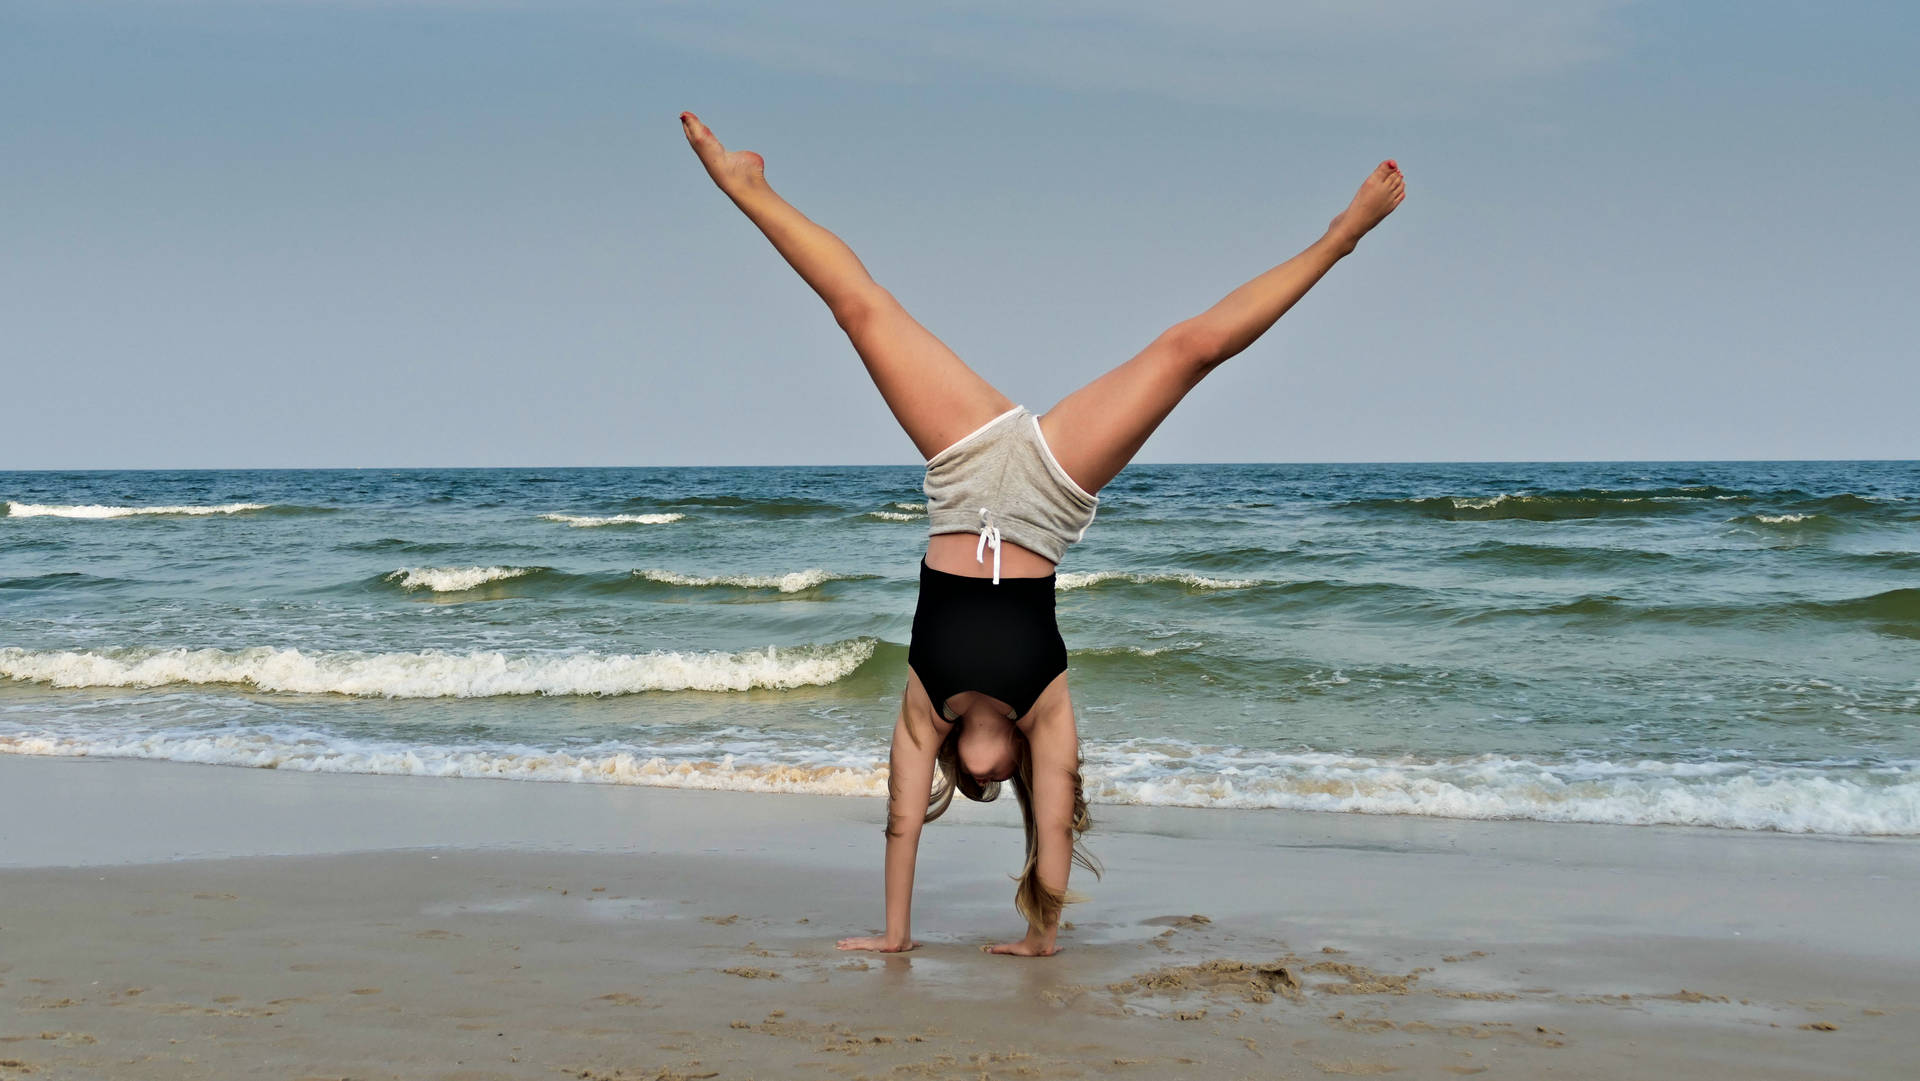 Gymnastics Handstand At Seashore Background